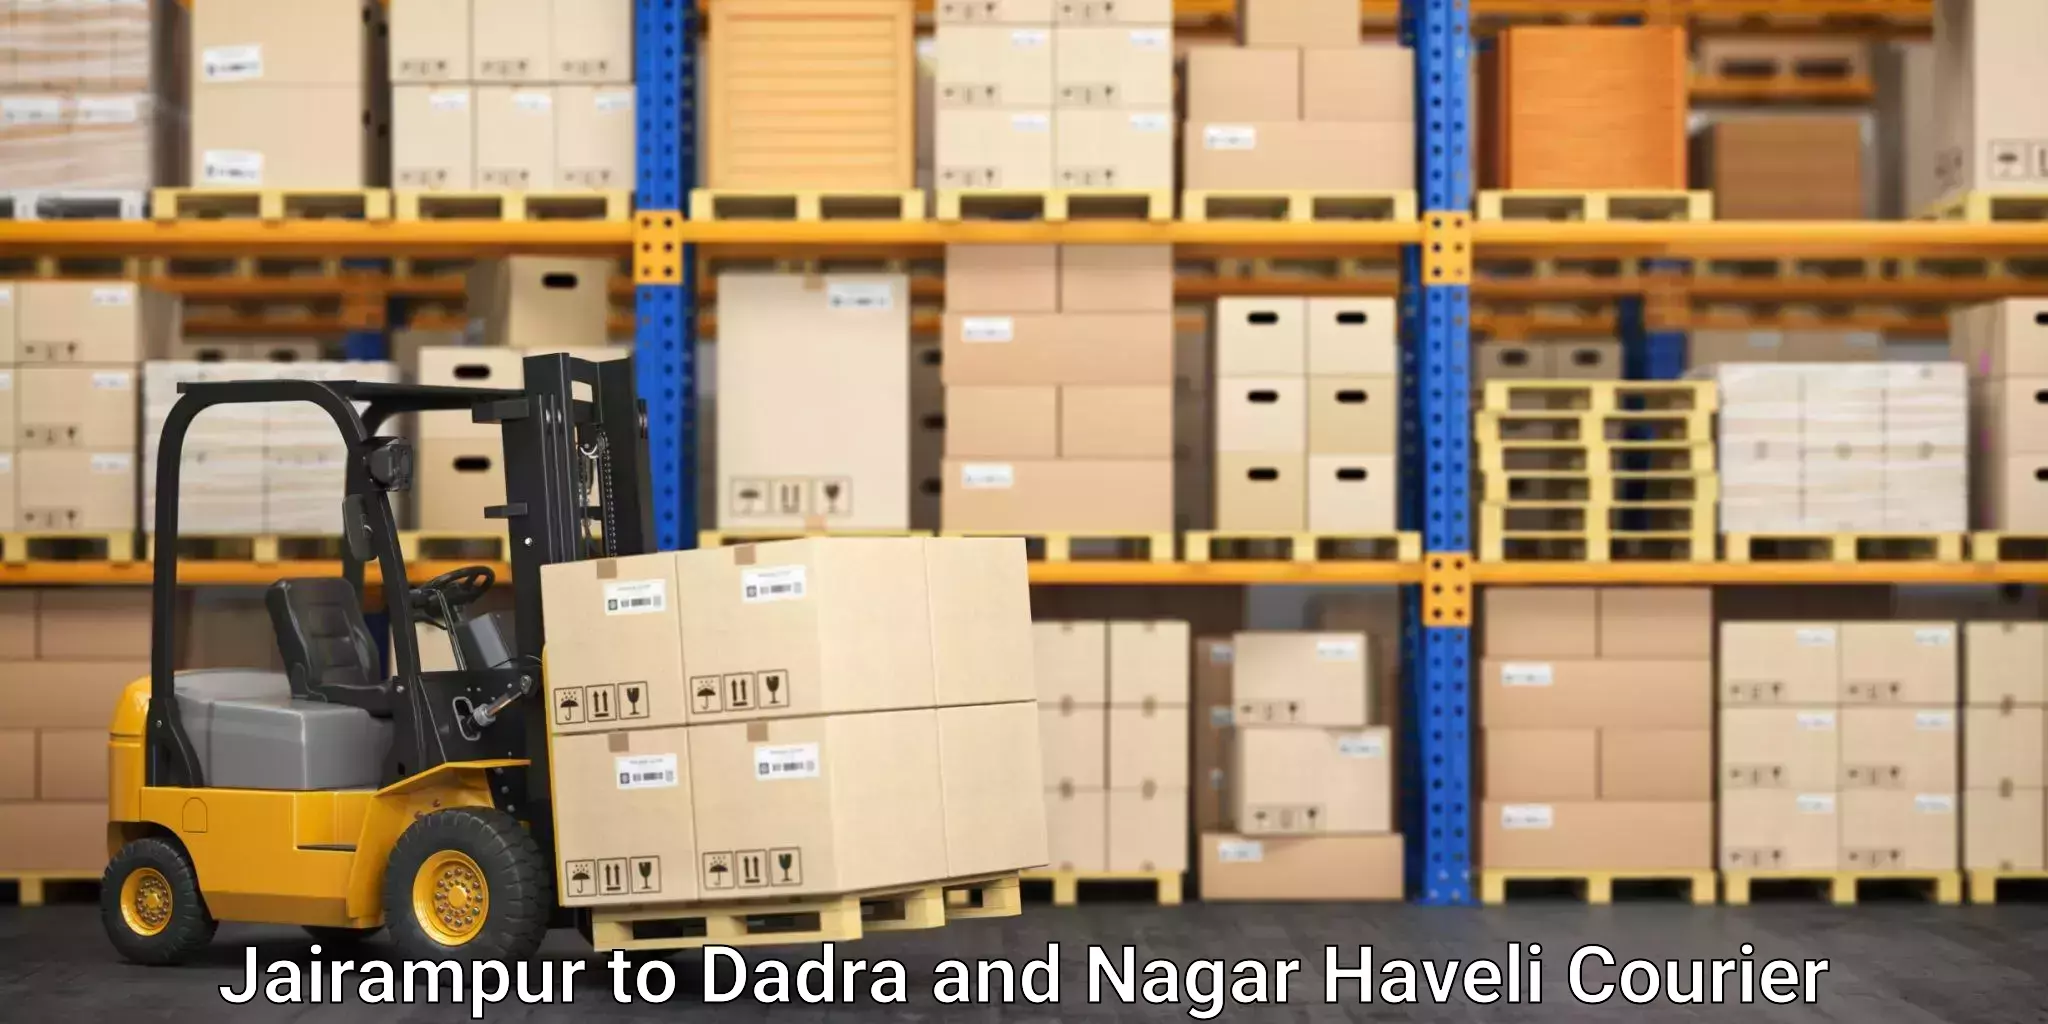 Expedited shipping solutions Jairampur to Dadra and Nagar Haveli